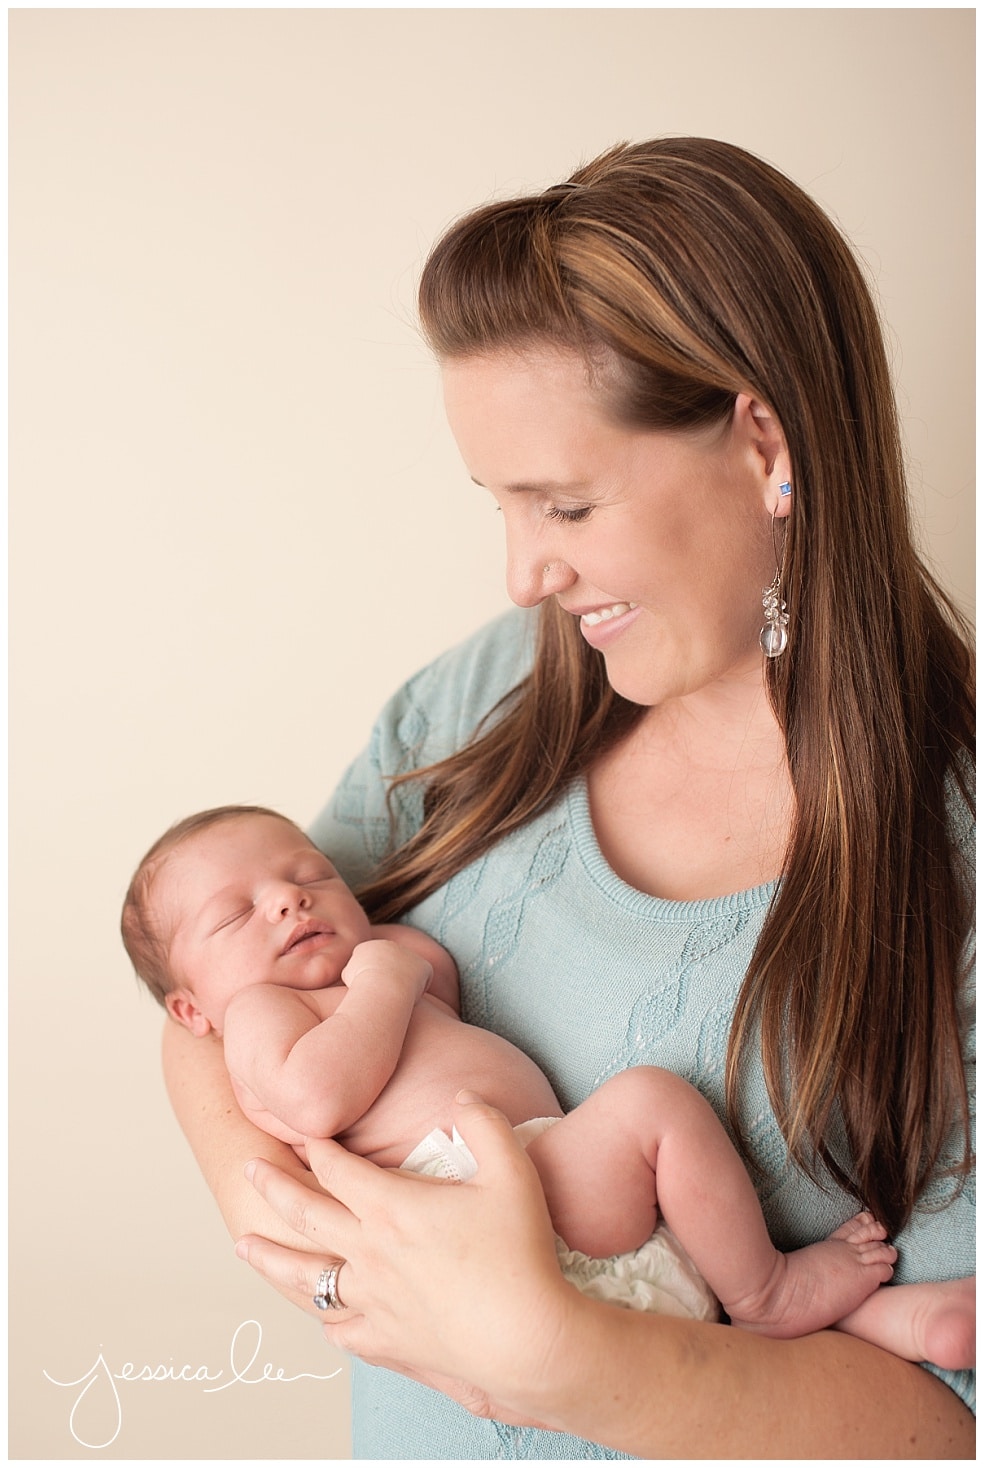 Newborn Baby Photographer Broomfield | Jessica Lee Photography | www.jessica-lee-photography.com